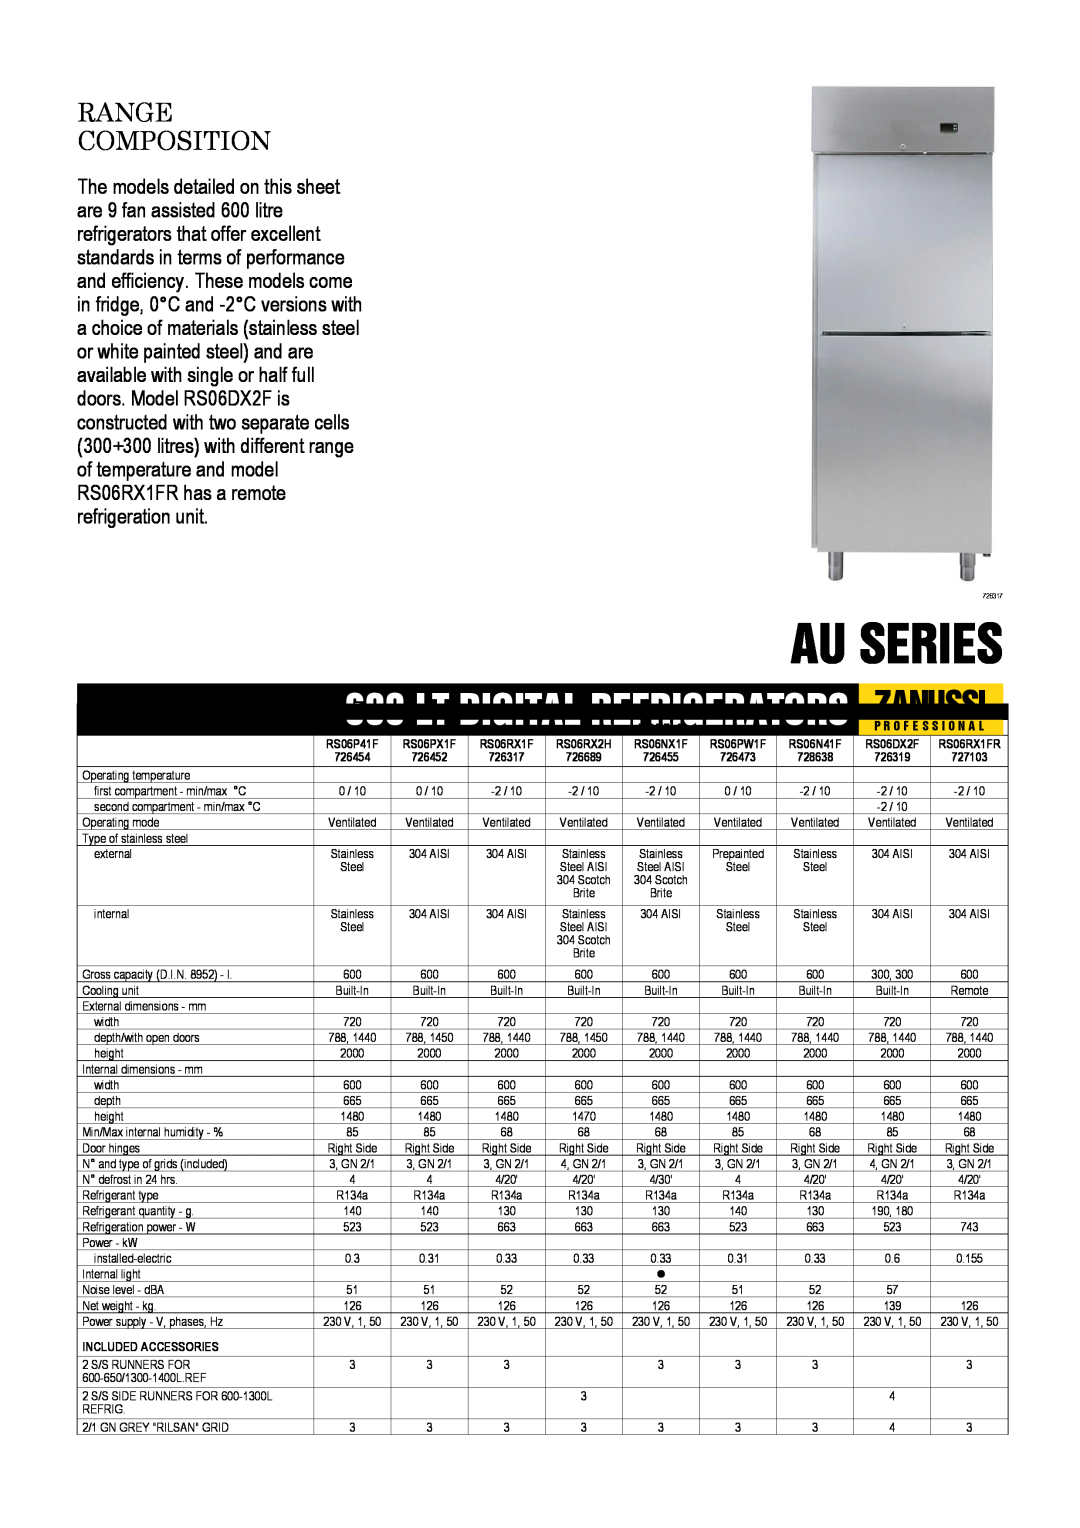 Zanussi 726473 dimensions Zanussi, Range Composition, Au Series, Digital, Refrigerators, Technical Data, Characteristics 